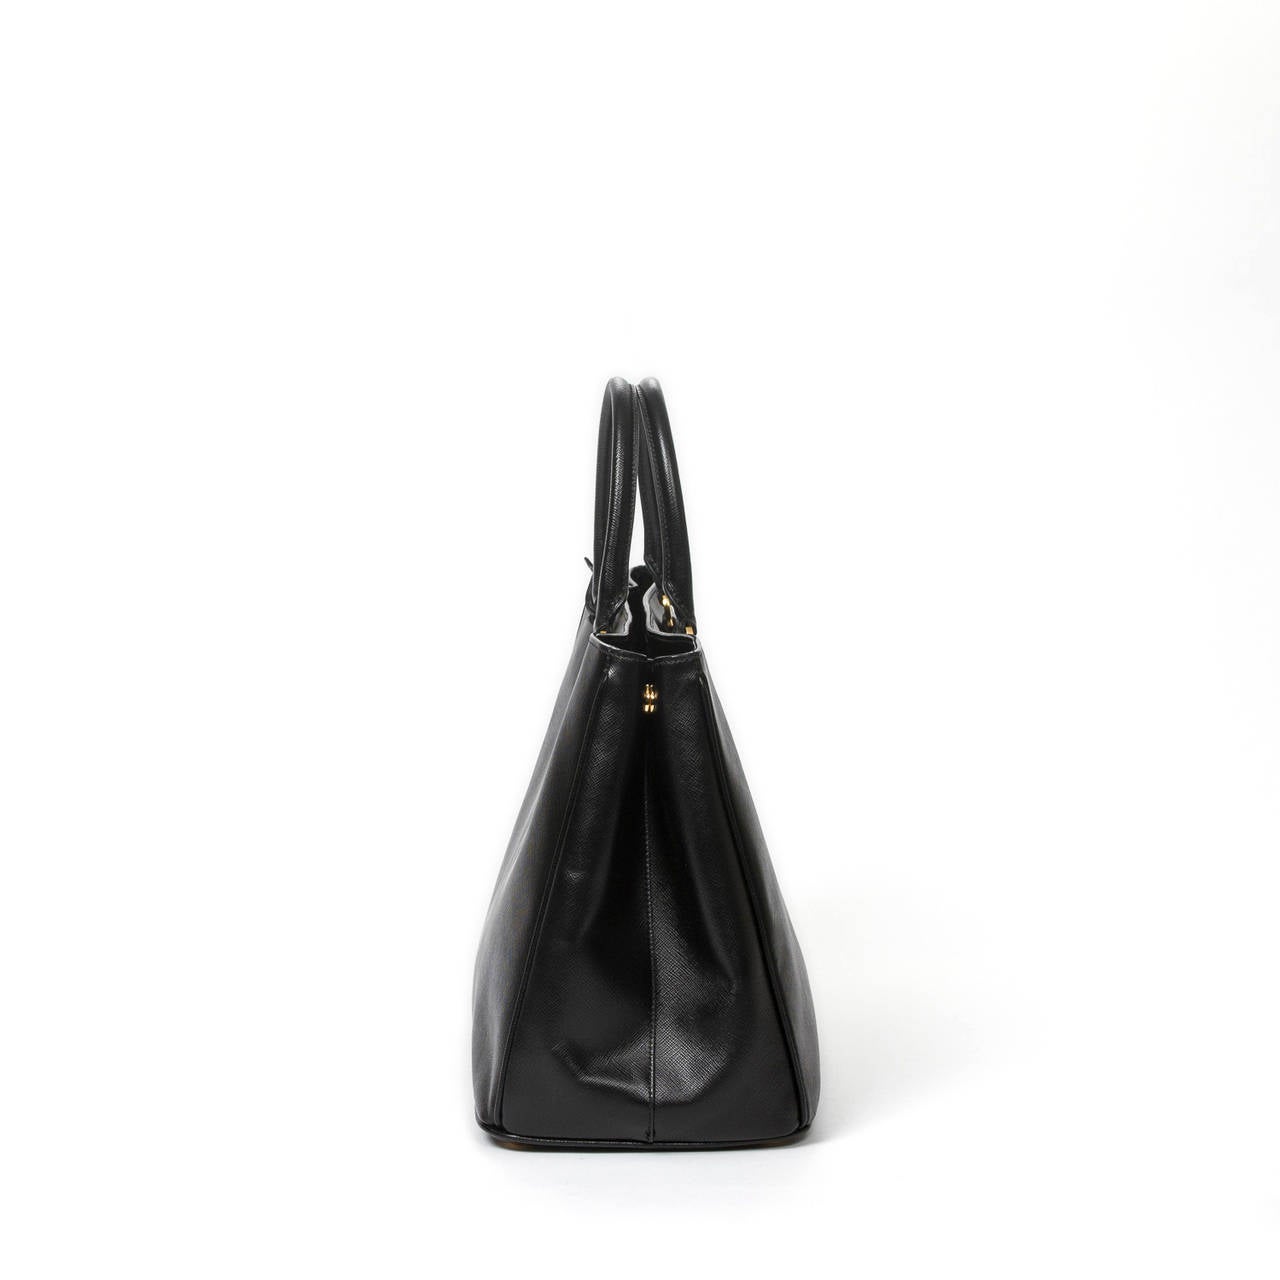 Prada Saffiano Lux Handbag Black In Excellent Condition For Sale In Dublin, IE